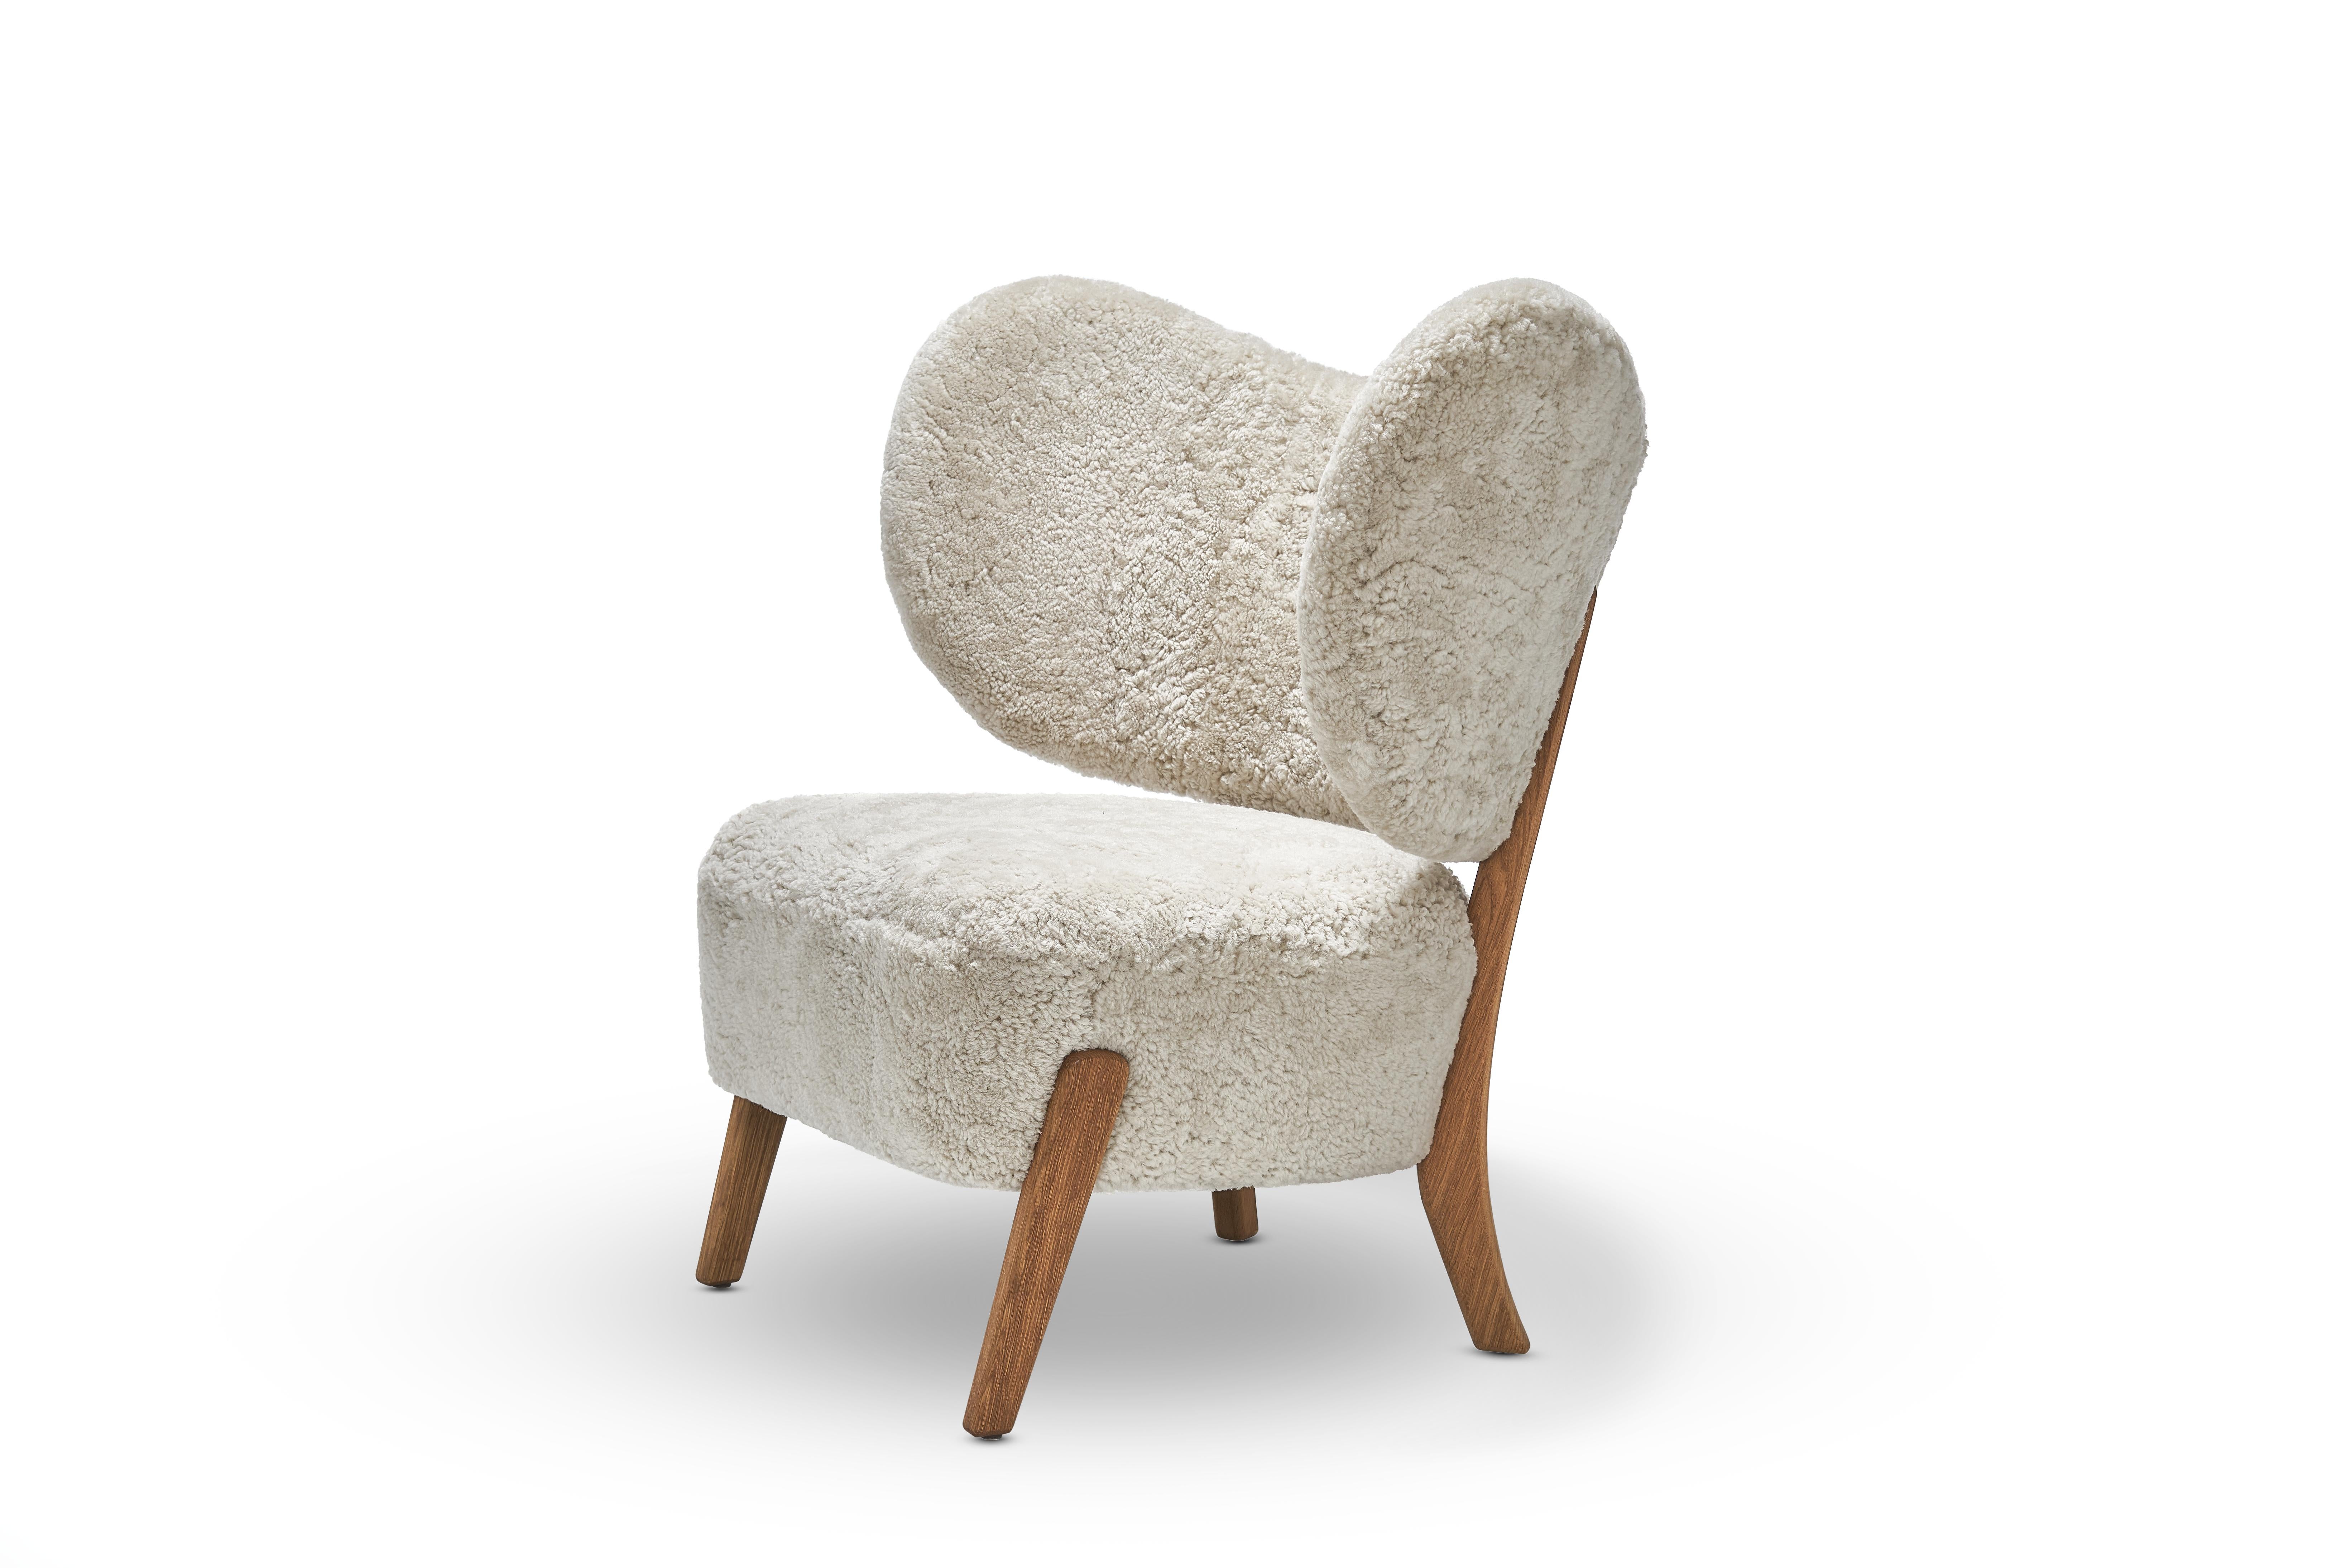 Moonlight Sheepskin TMBO lounge chair by Mazo Design
Dimensions: W 90 x D 68.5 x H 87 cm
Materials: Oak, Sheepskin.
Also available: ROMO/Linara, DAW/Royal, KVADRAT/Remix, KVADRAT/Hallingdal & Fiord, BUTE/Storr, DEDAR/Linear,
DAW/Mohair & Mcnutt,